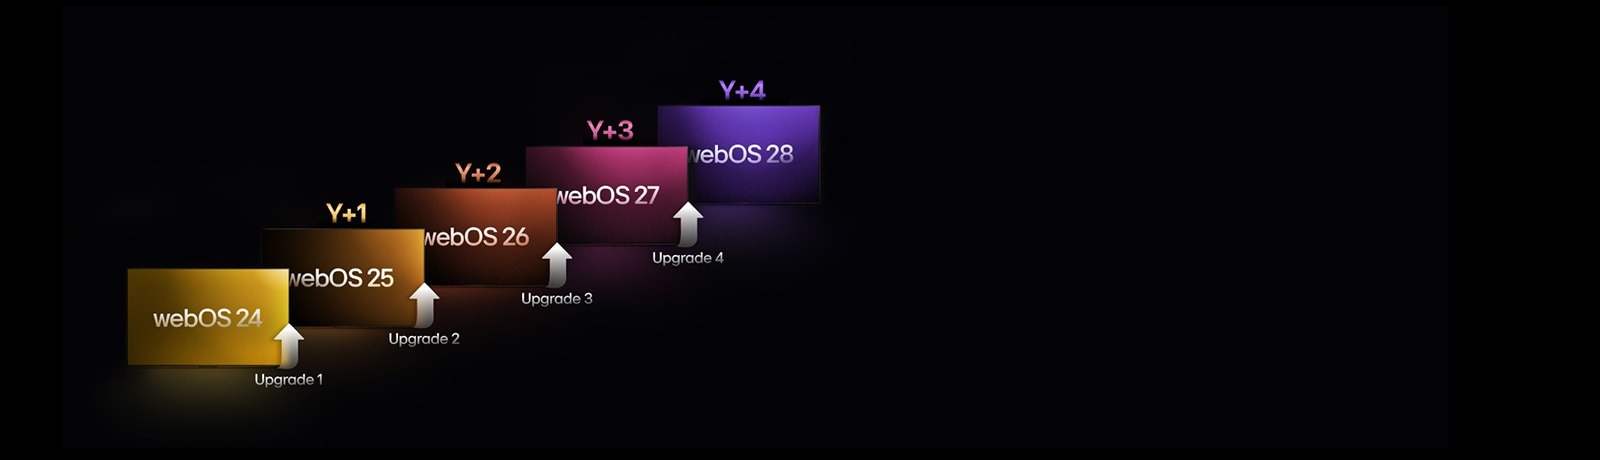 oled-b4-28-webos-renew-program-d